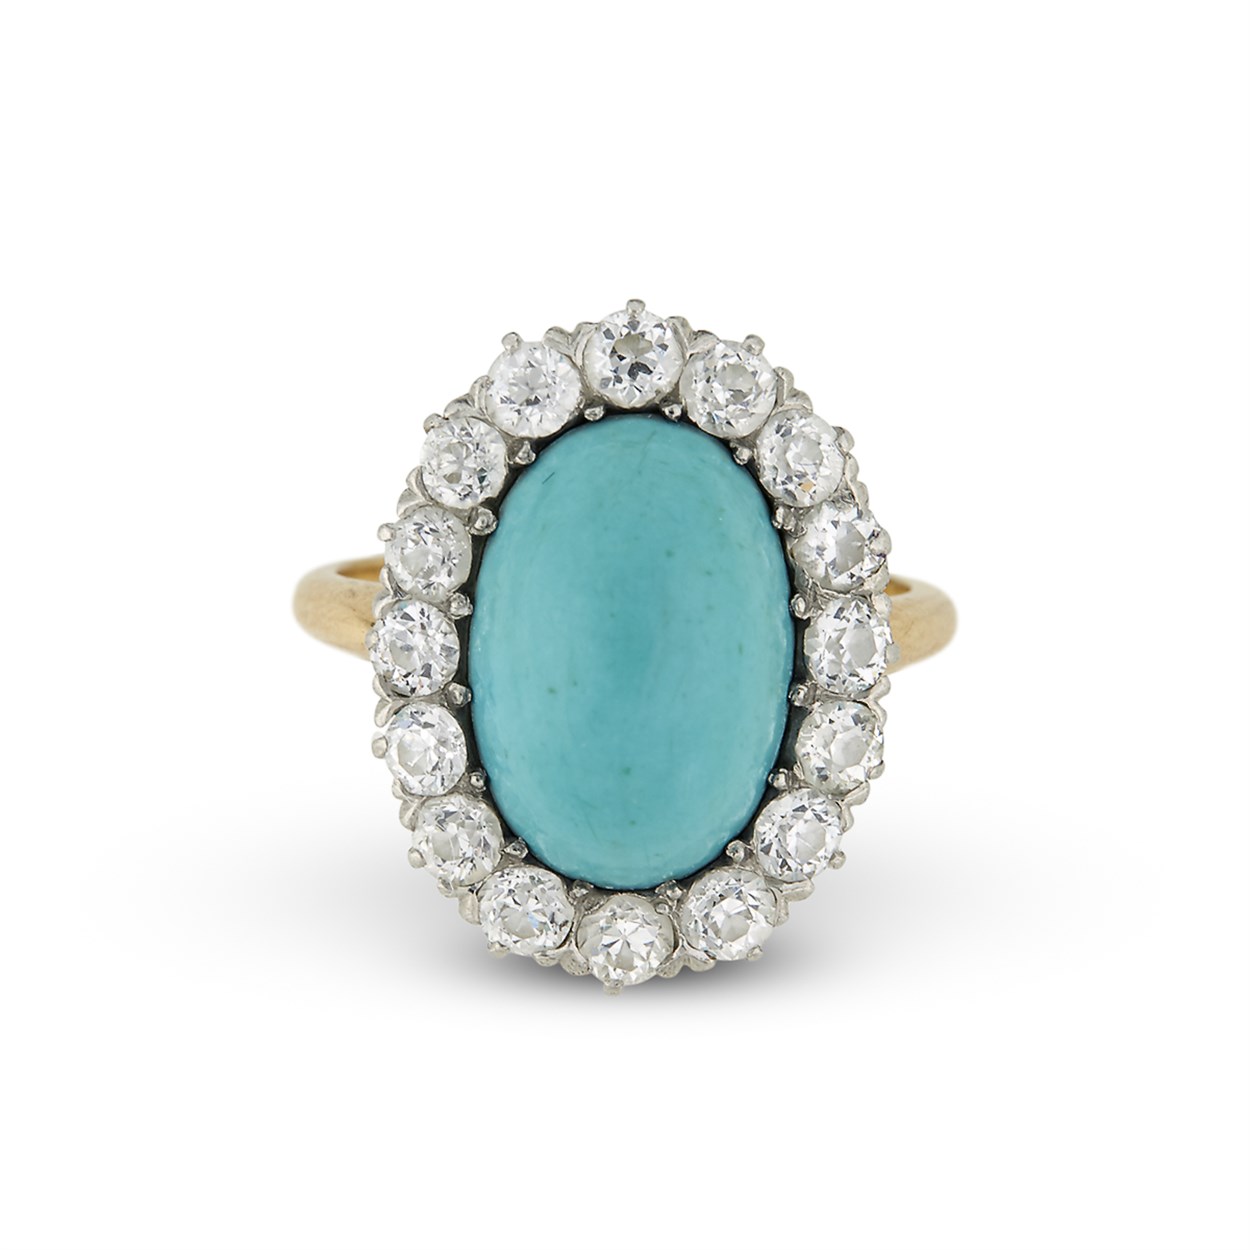 Lot 25 - A turquoise, diamond and eighteen karat gold ring, J.E. Caldwell